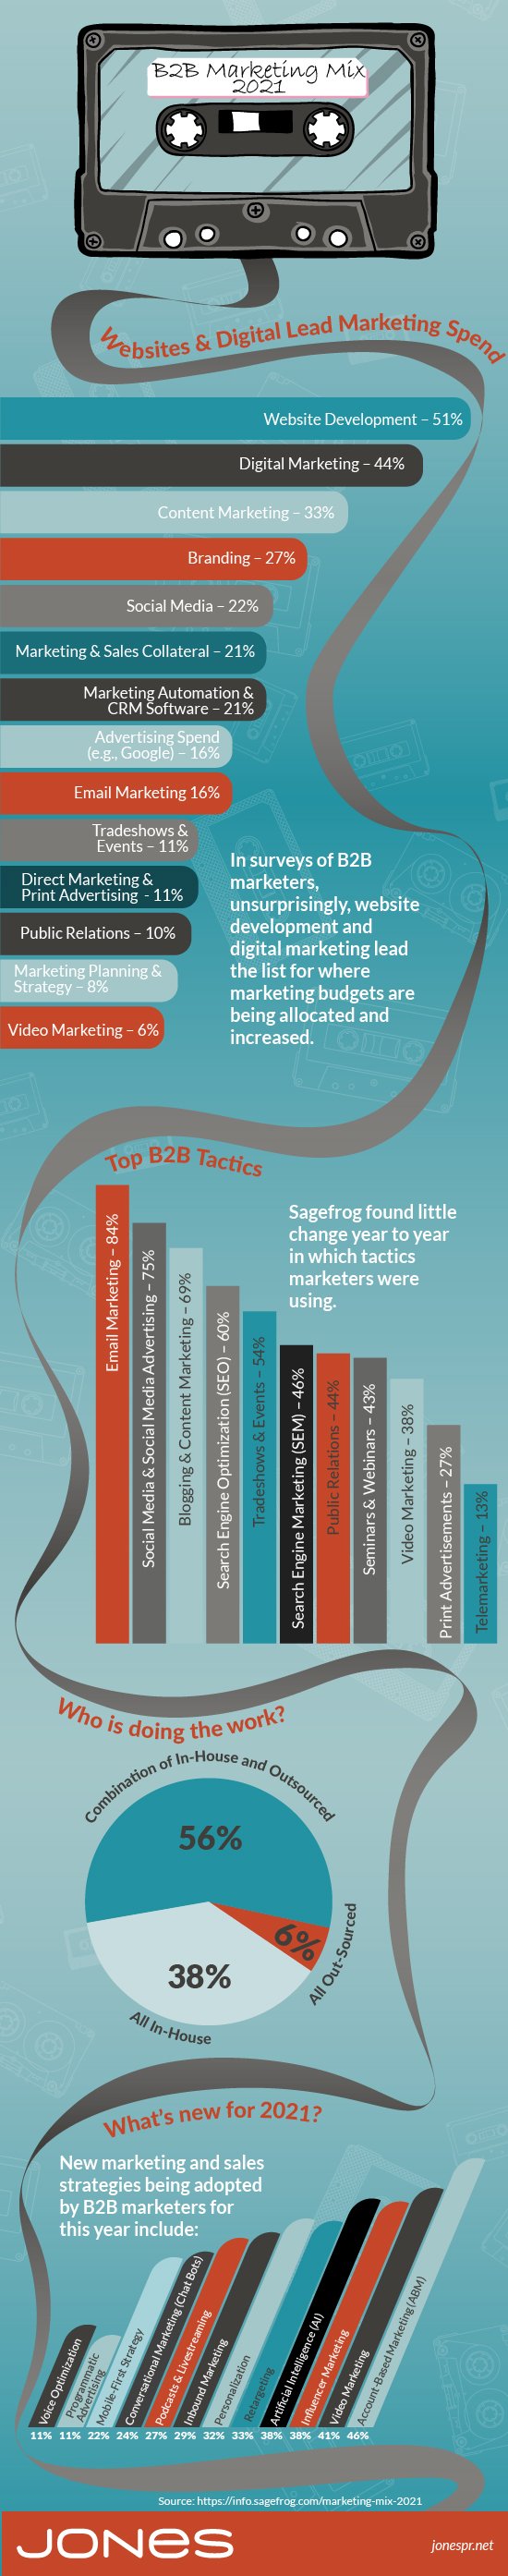 jones-infographic-2021-b2b-marketing-mix